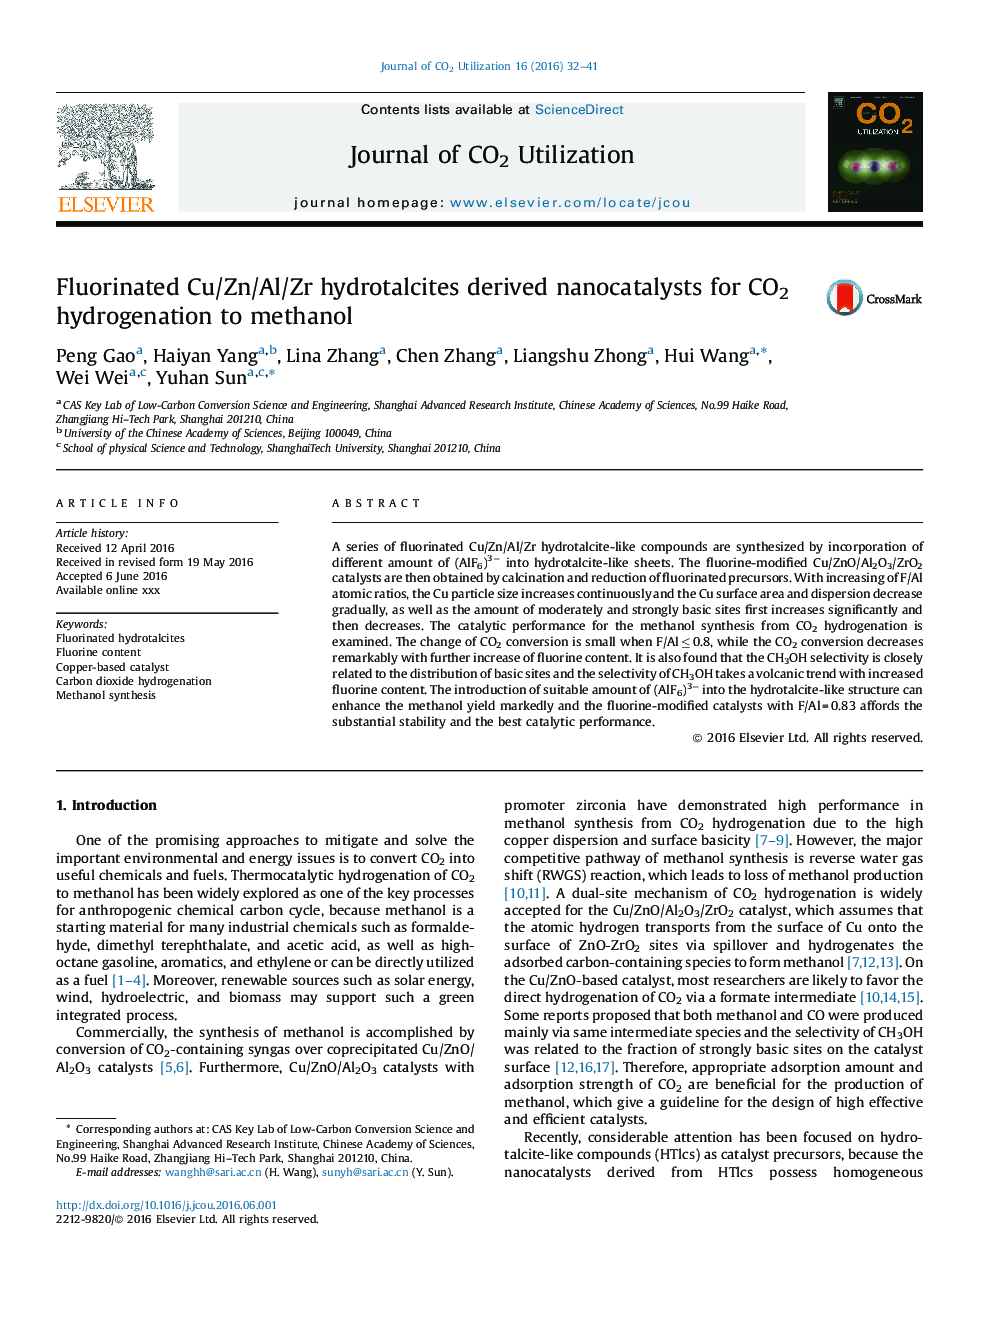 Fluorinated Cu/Zn/Al/Zr hydrotalcites derived nanocatalysts for CO2 hydrogenation to methanol